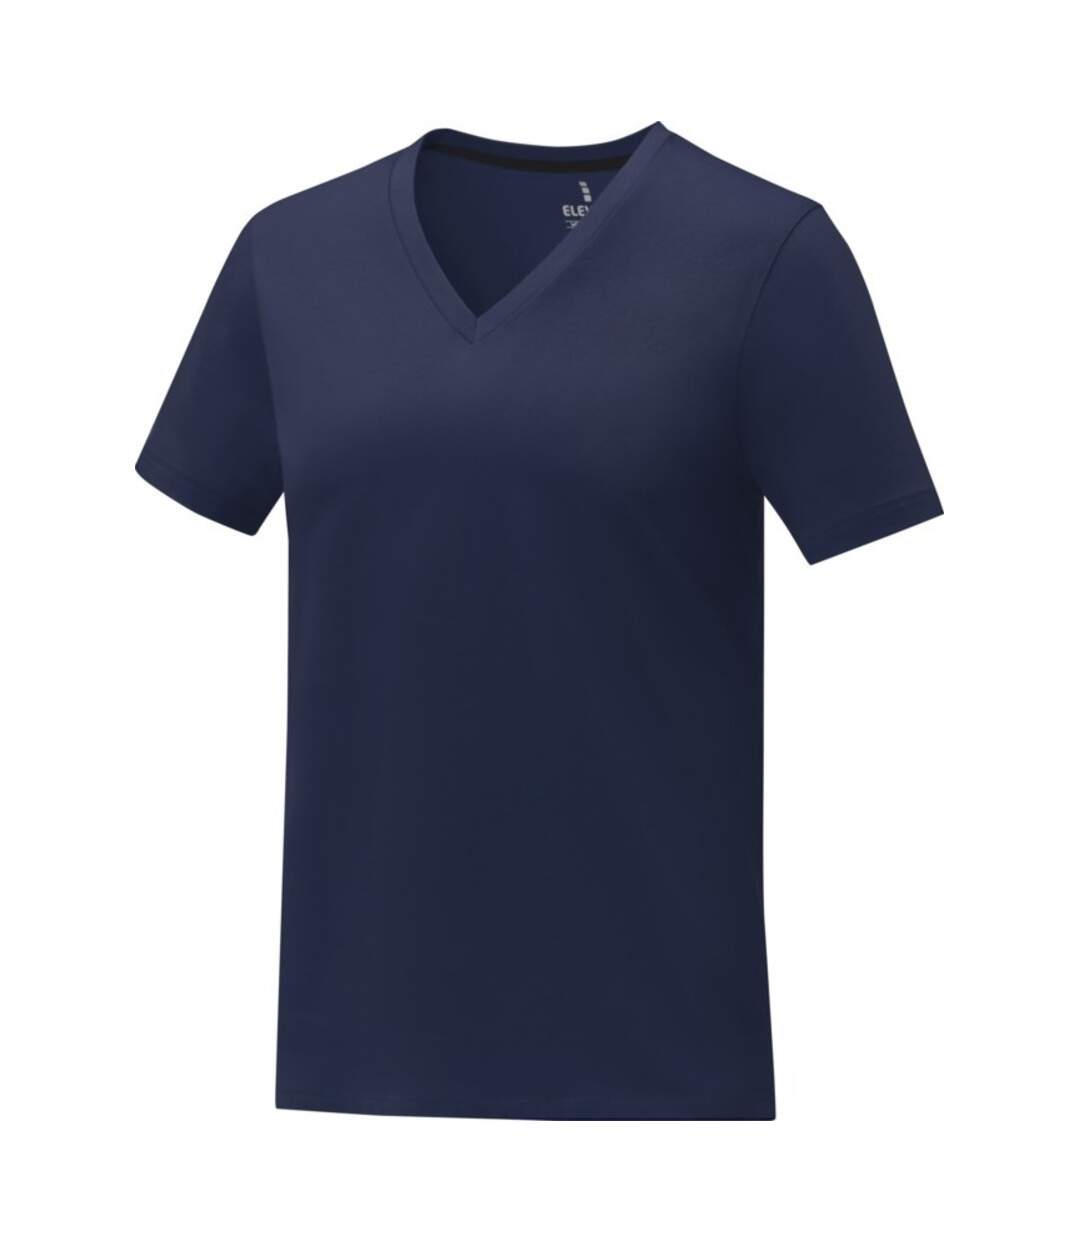 Elevate - T-shirt SOMOTO - Femme (Bleu marine) - UTPF3926